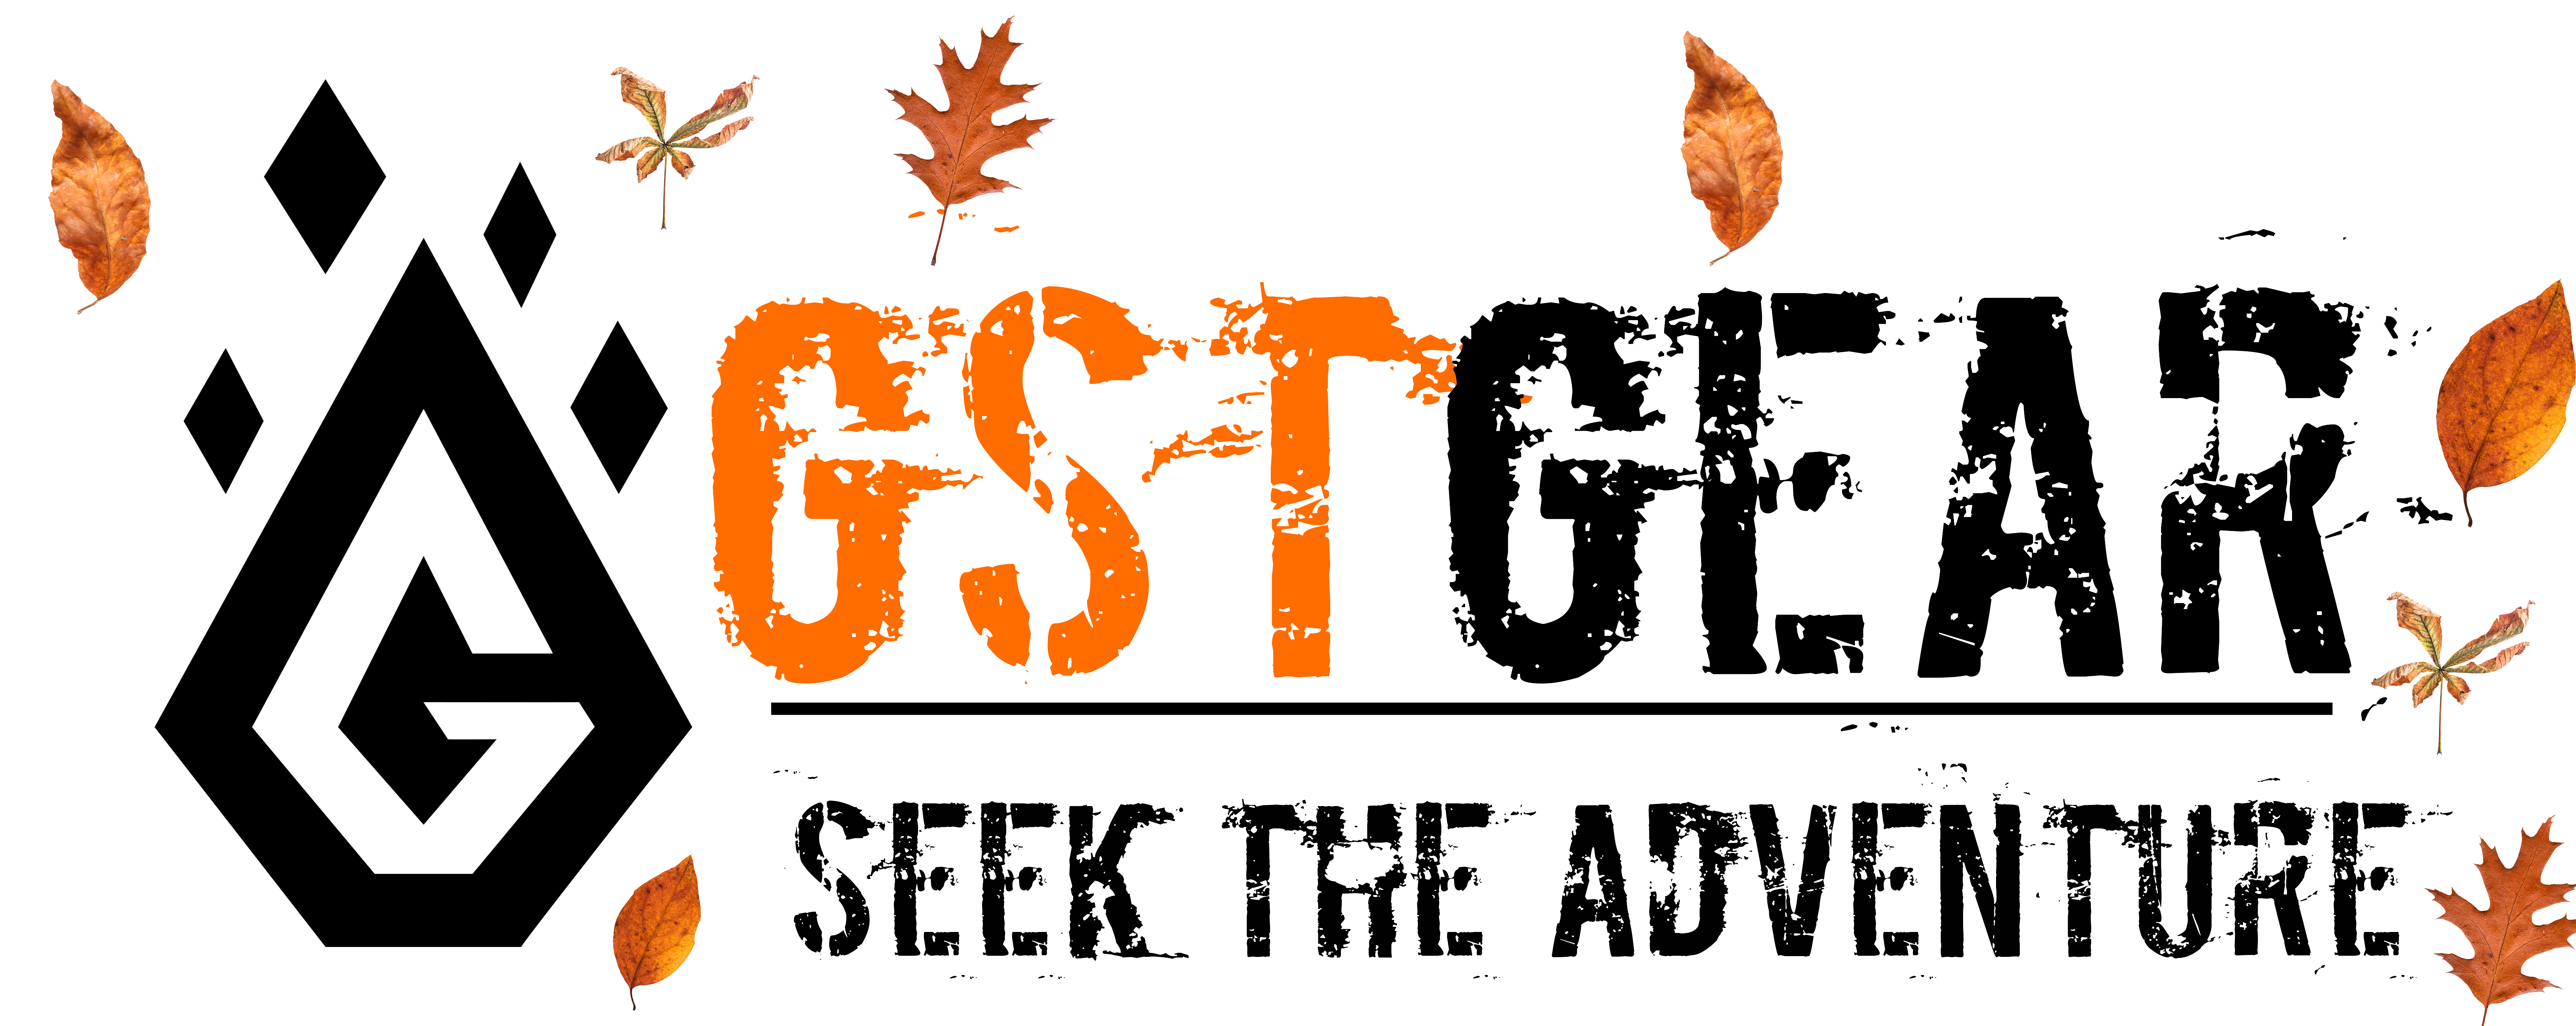 GSTgear - Seek the adventure